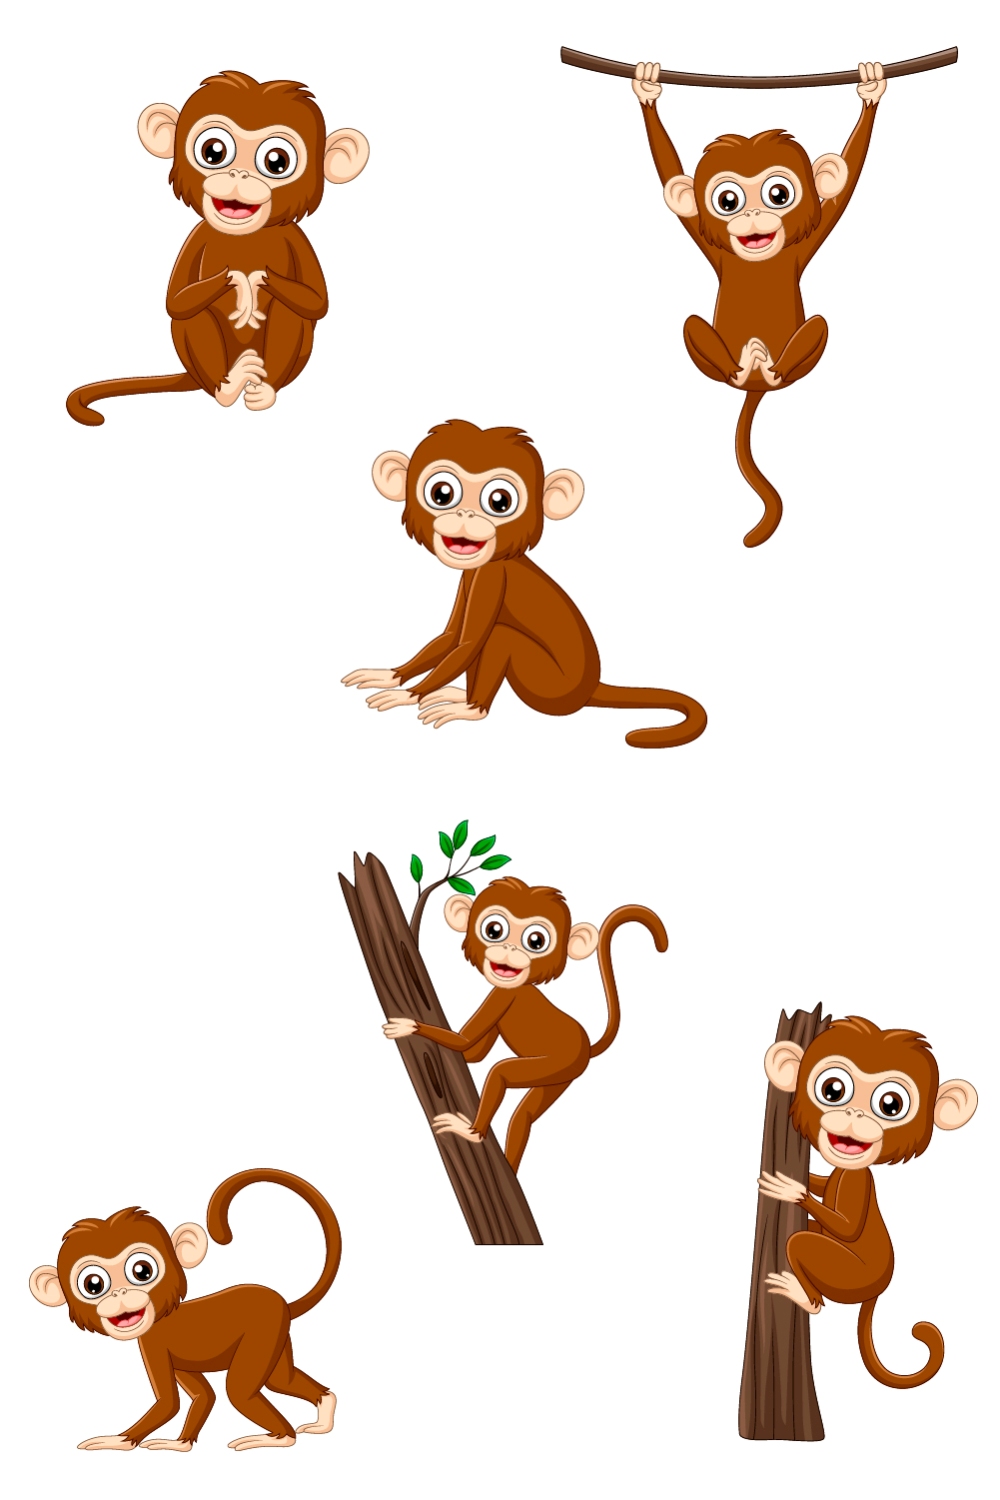 6 Cartoon Baby Monkeys pinterest preview image.